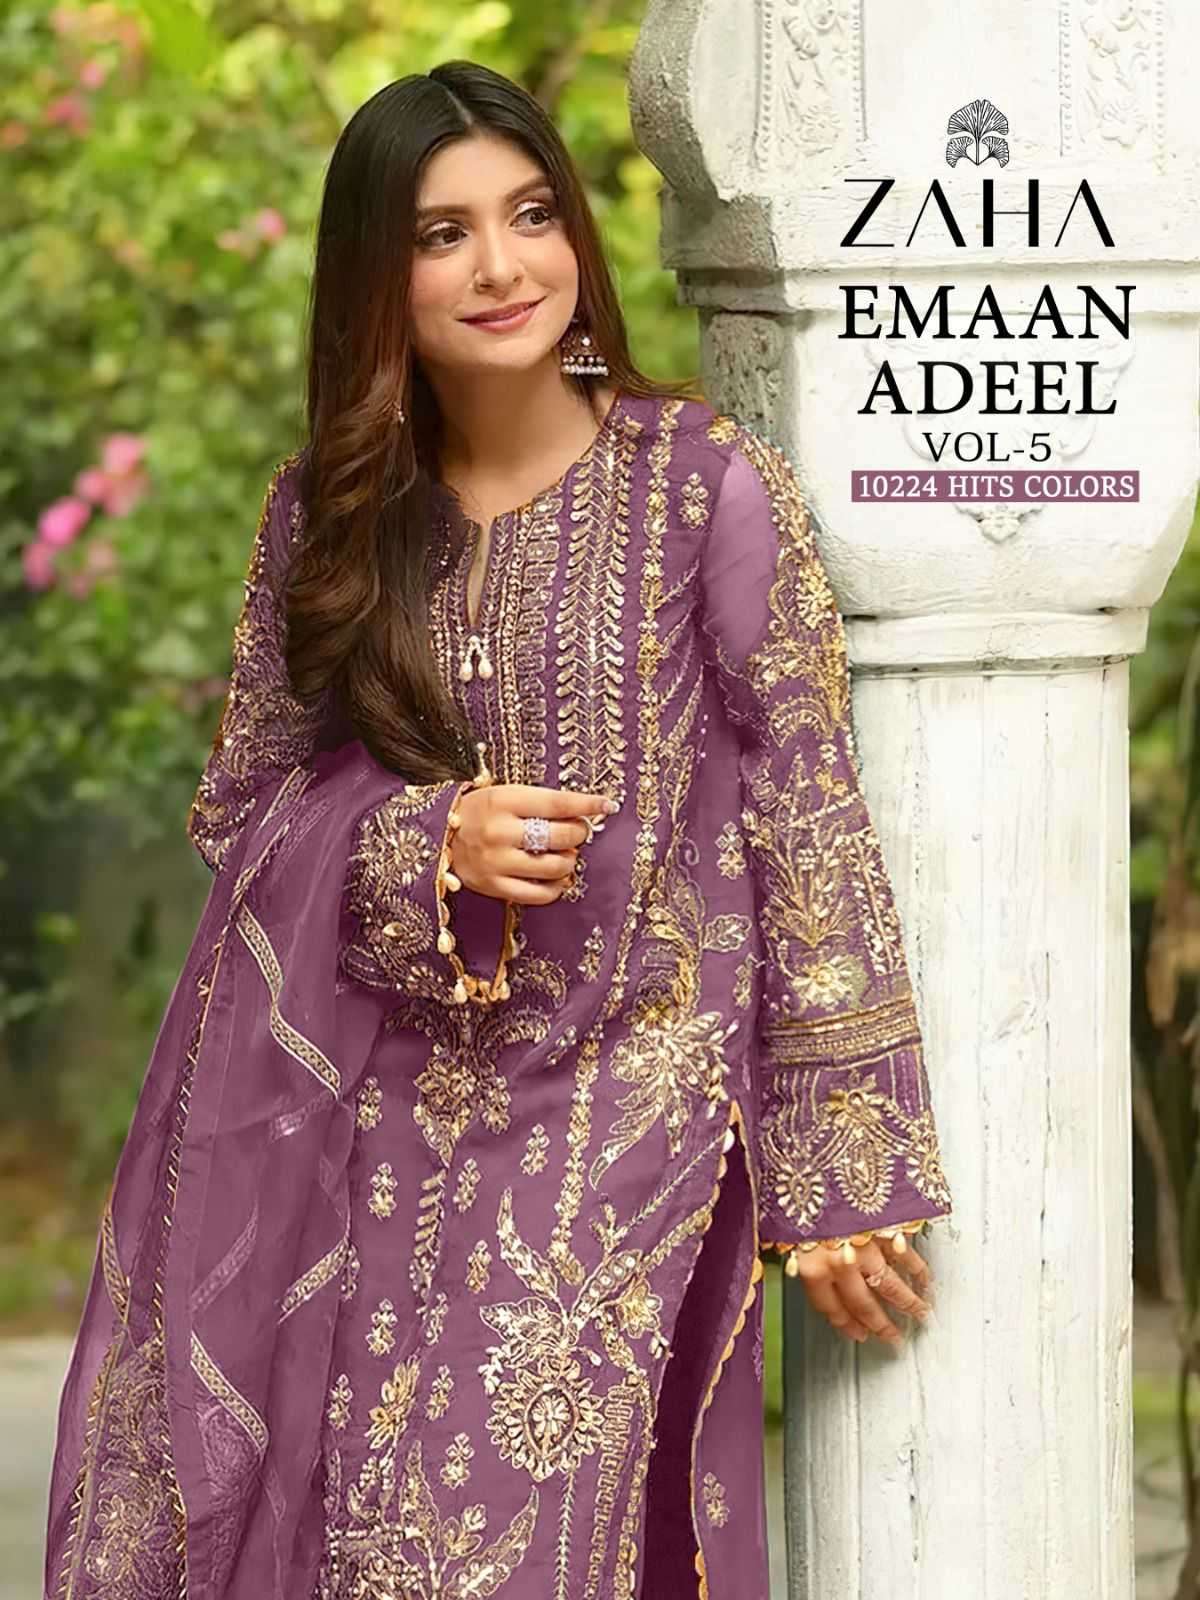 zaha emaan adeel vol 5 10224 abcd hits colors georgette suit 